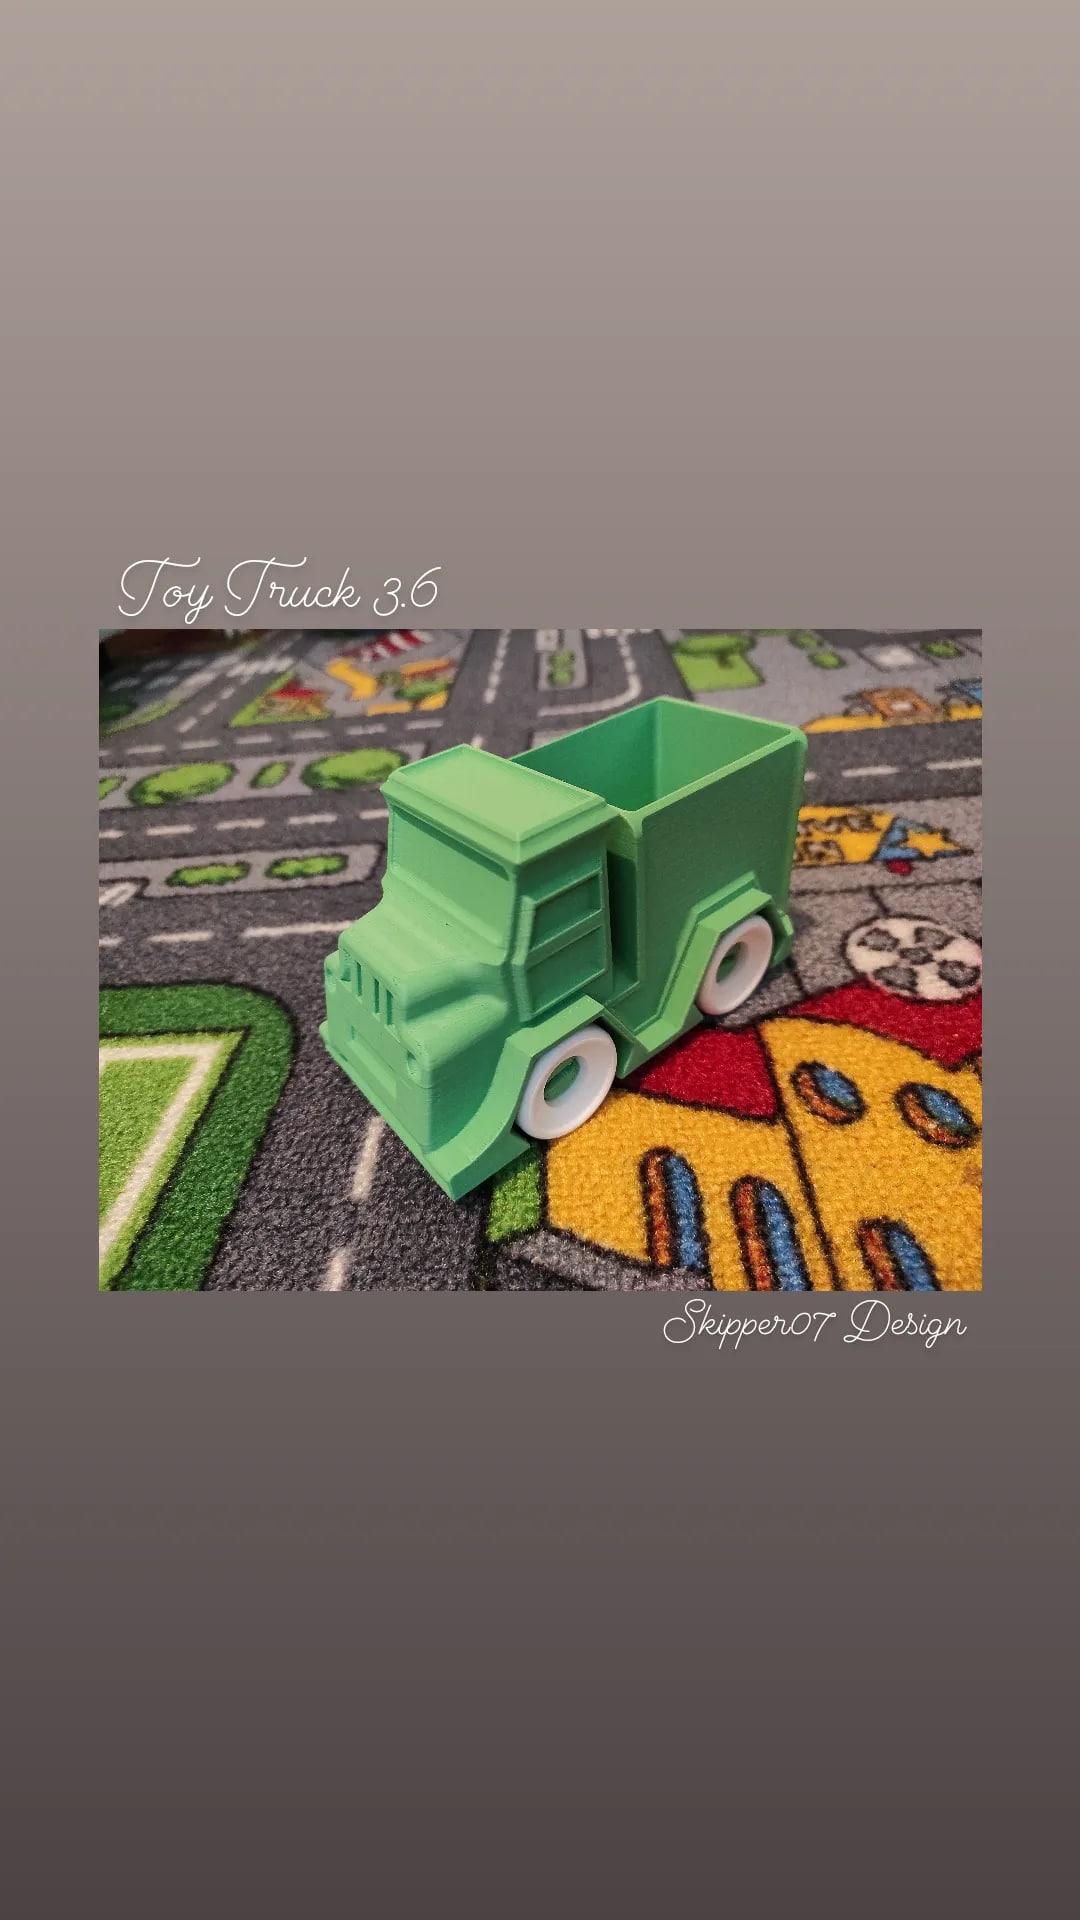 Toy Truck 3.6 3d model